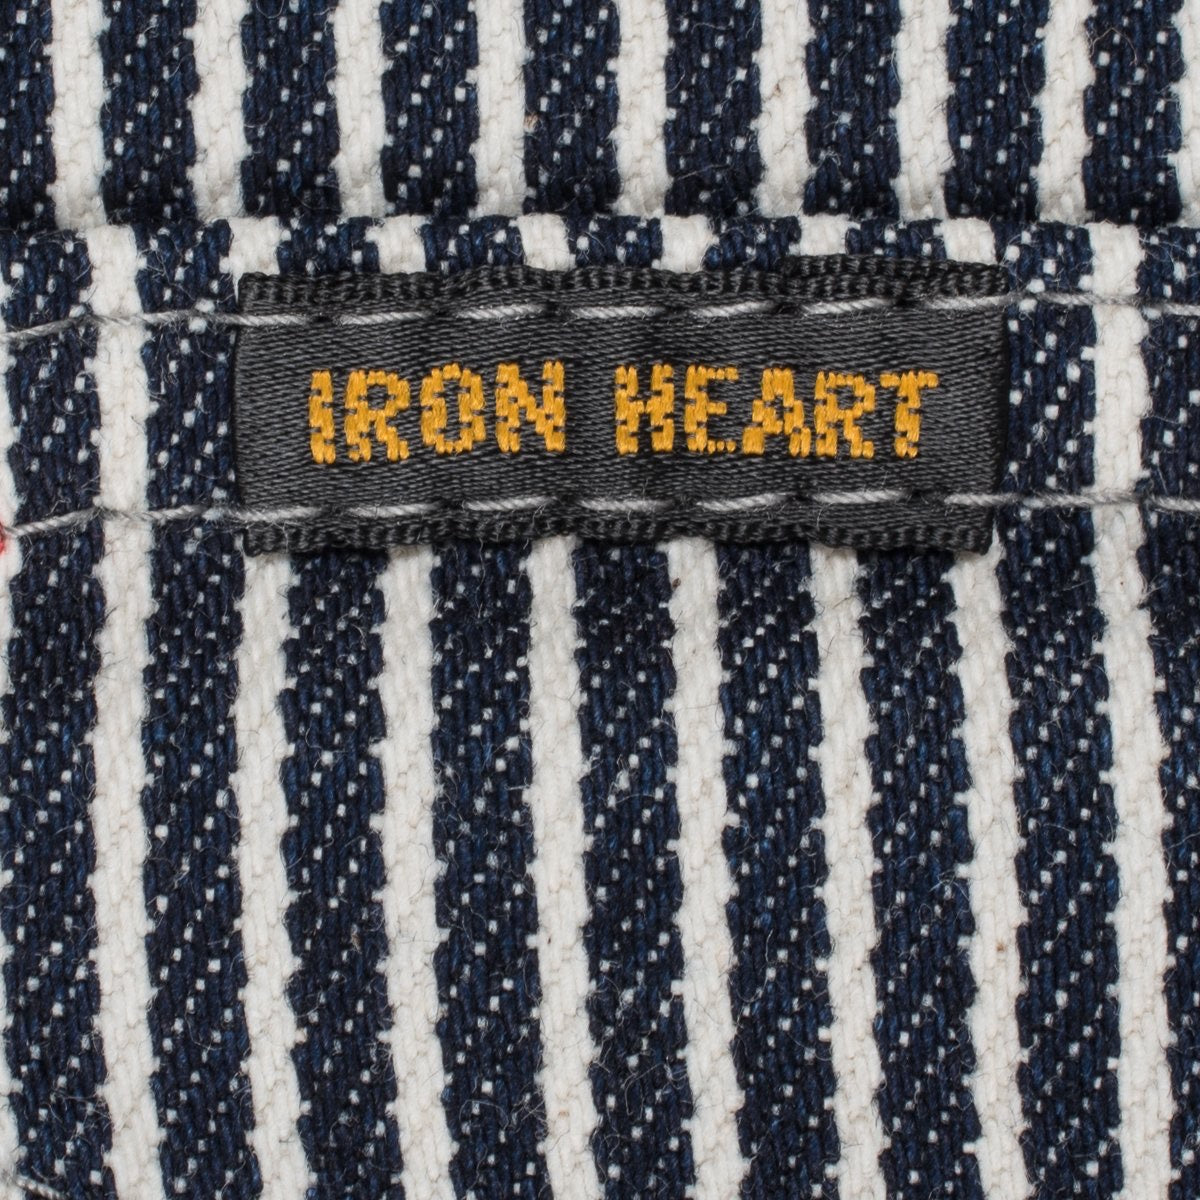 Iron Heart - IHSH-07 Hickory Stripe Western Shirt - Indigo